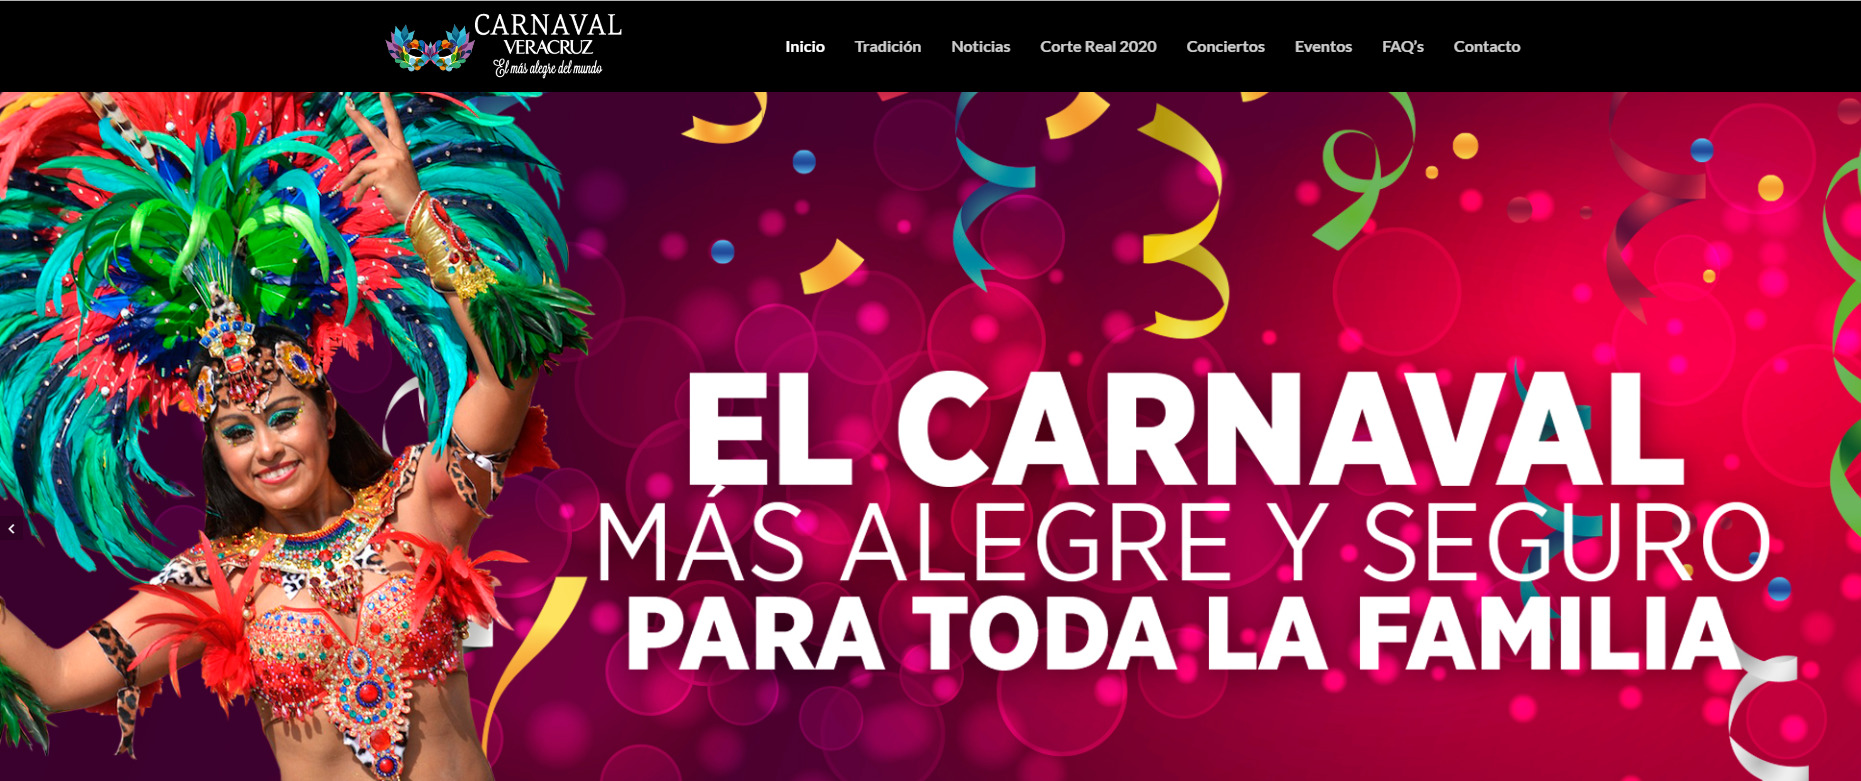 Foto de captura de la página oficial del carnaval de veracruz